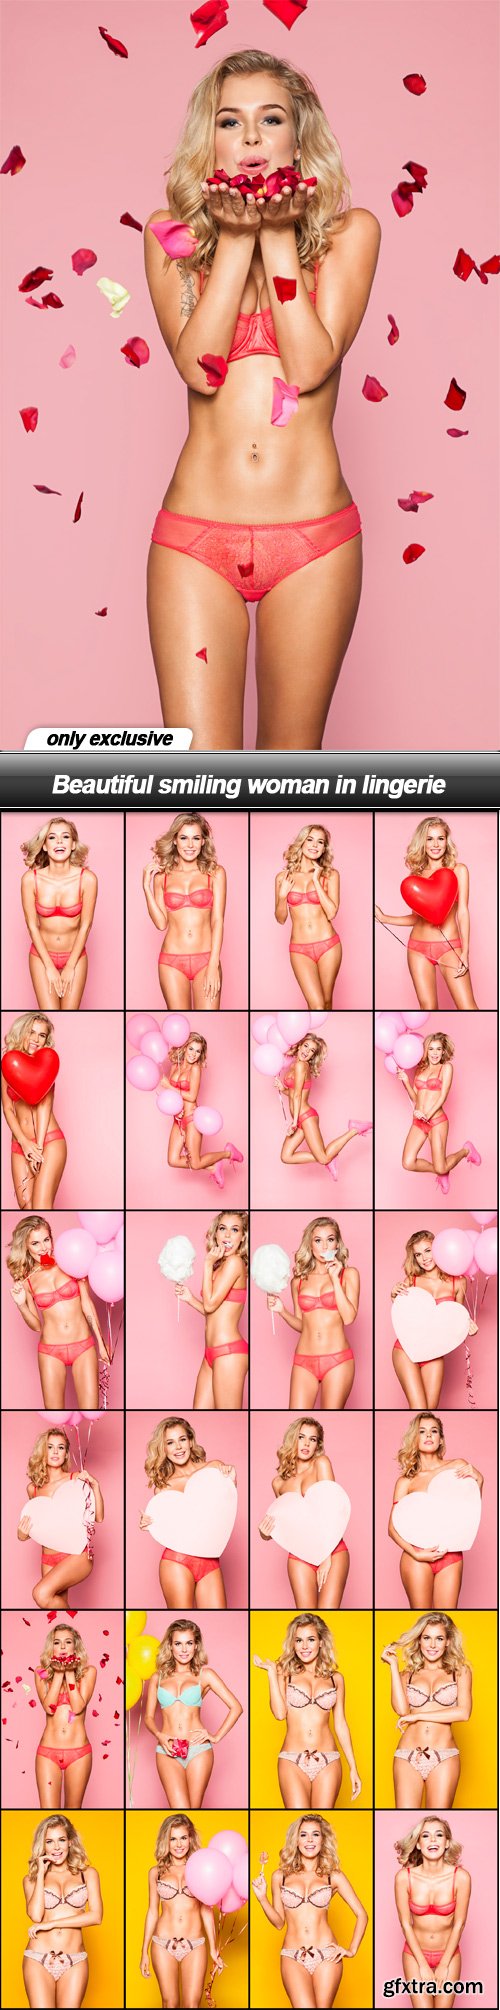 Beautiful smiling woman in lingerie - 23 UHQ JPEG